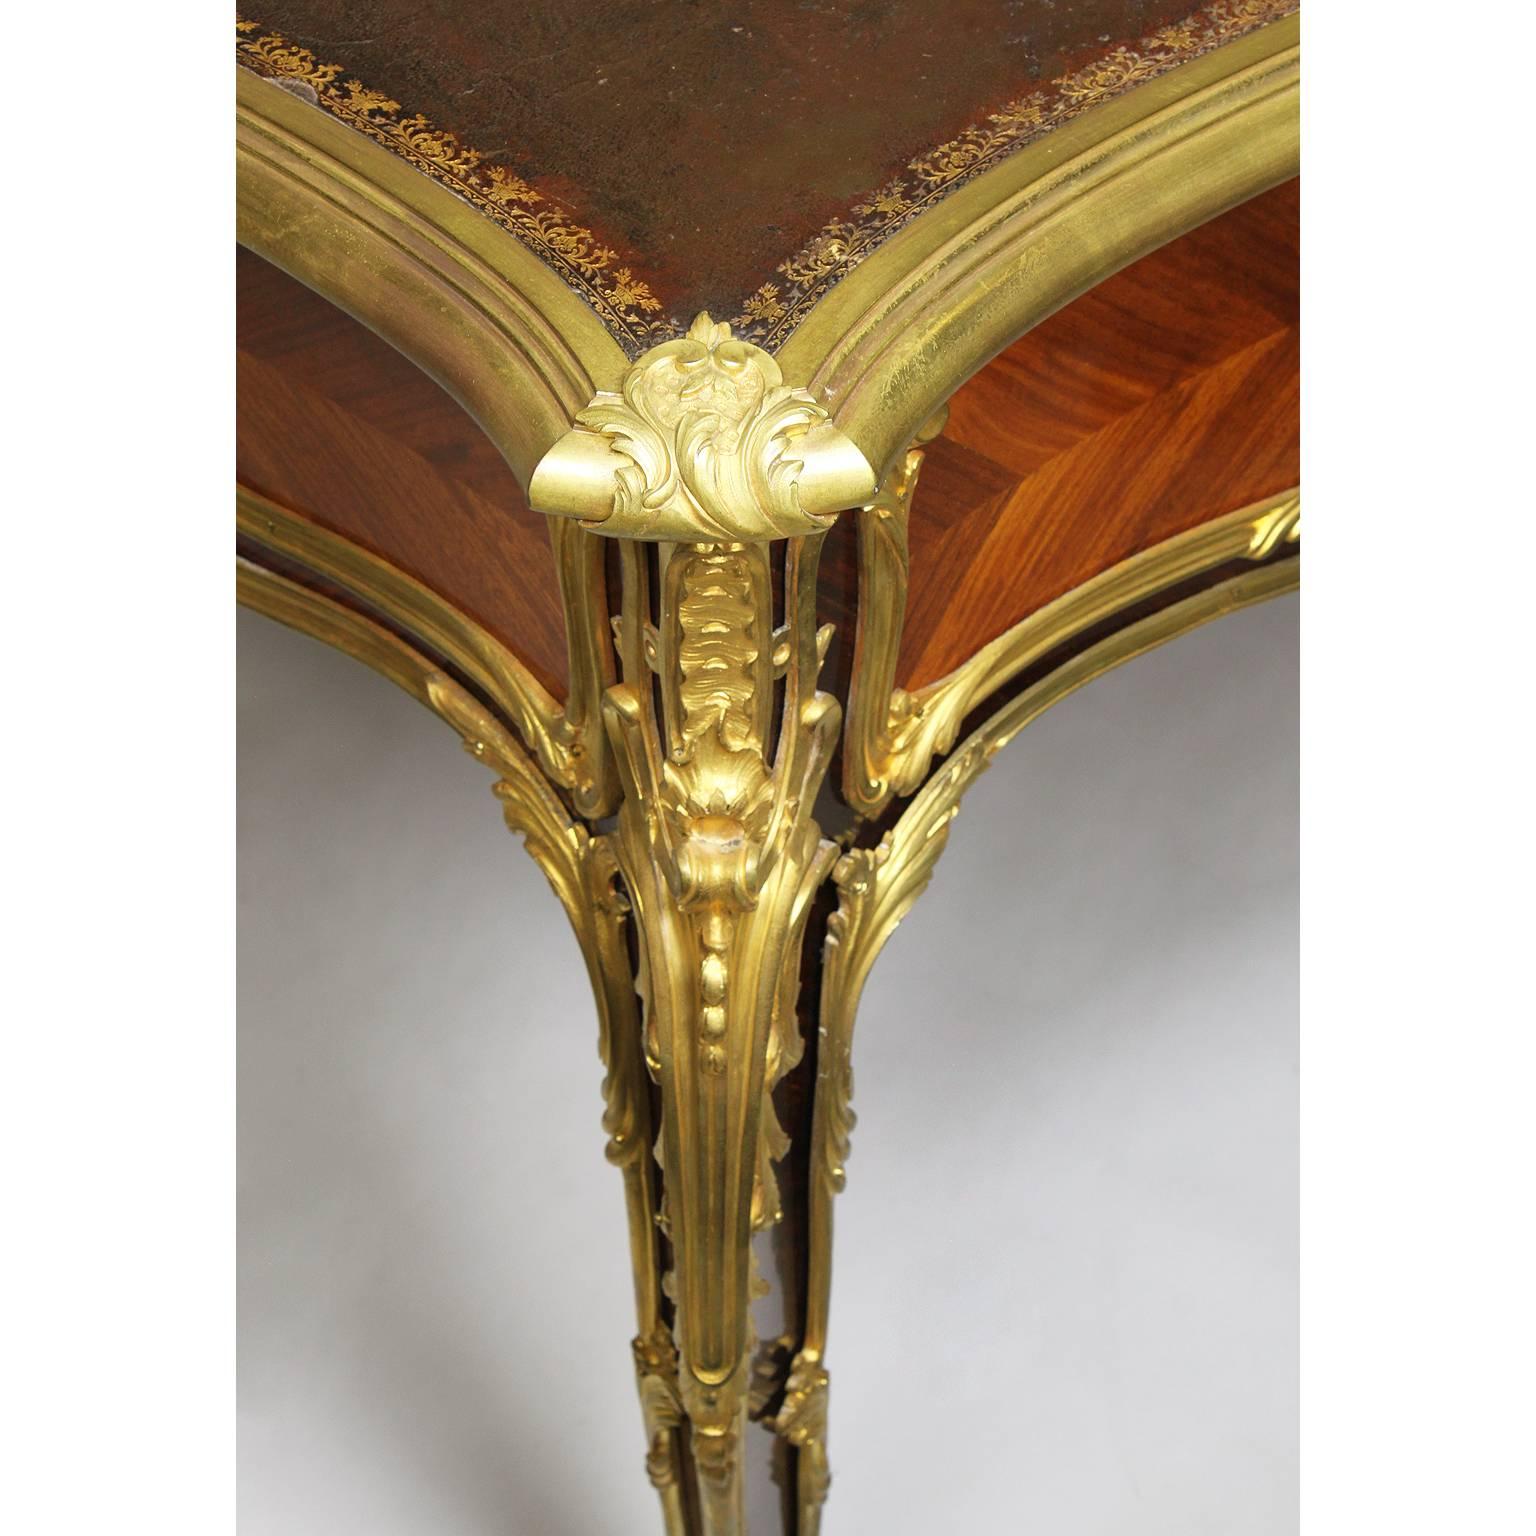 French 19th Century Louis XV Style Kingwood Gilt-Bronze Mounted Bureau Plat Desk For Sale 4